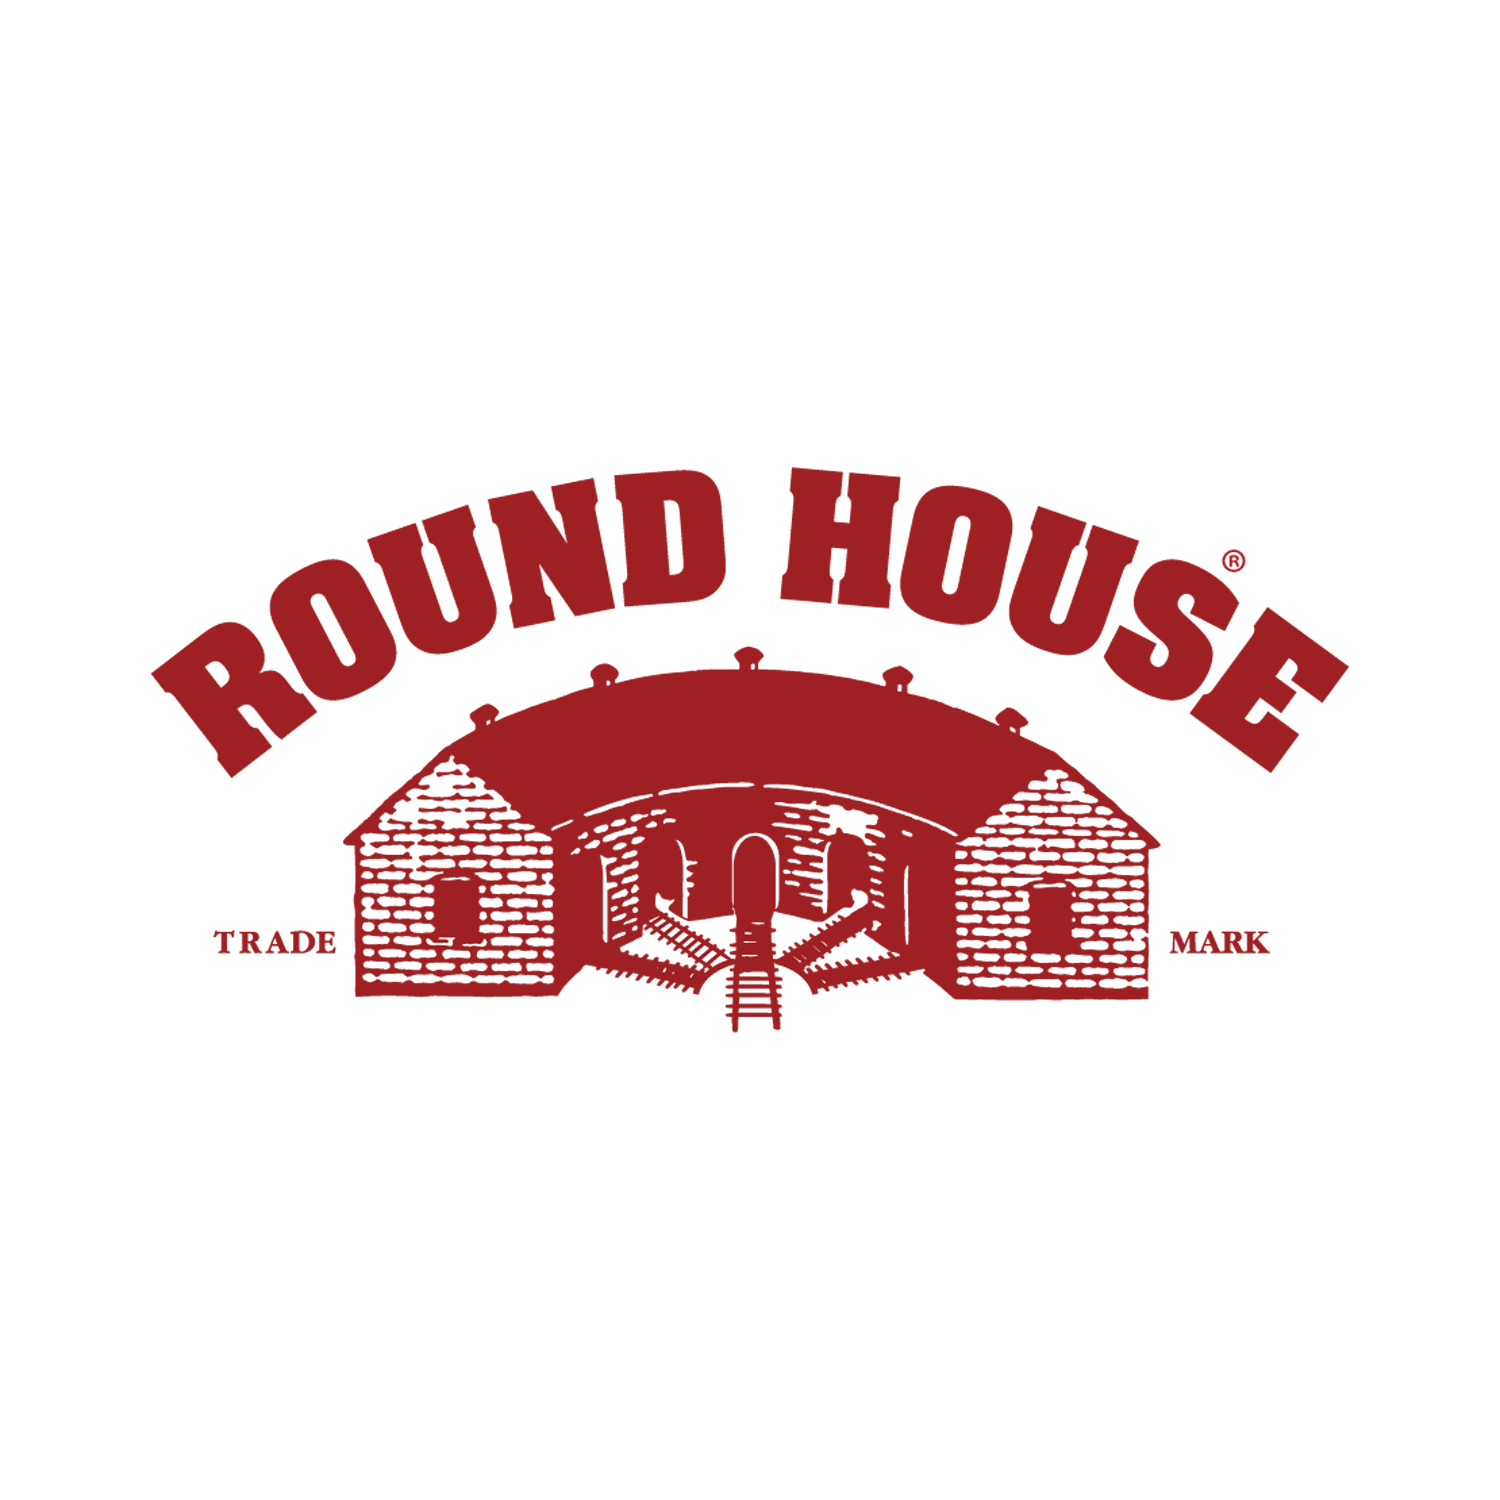 Round House